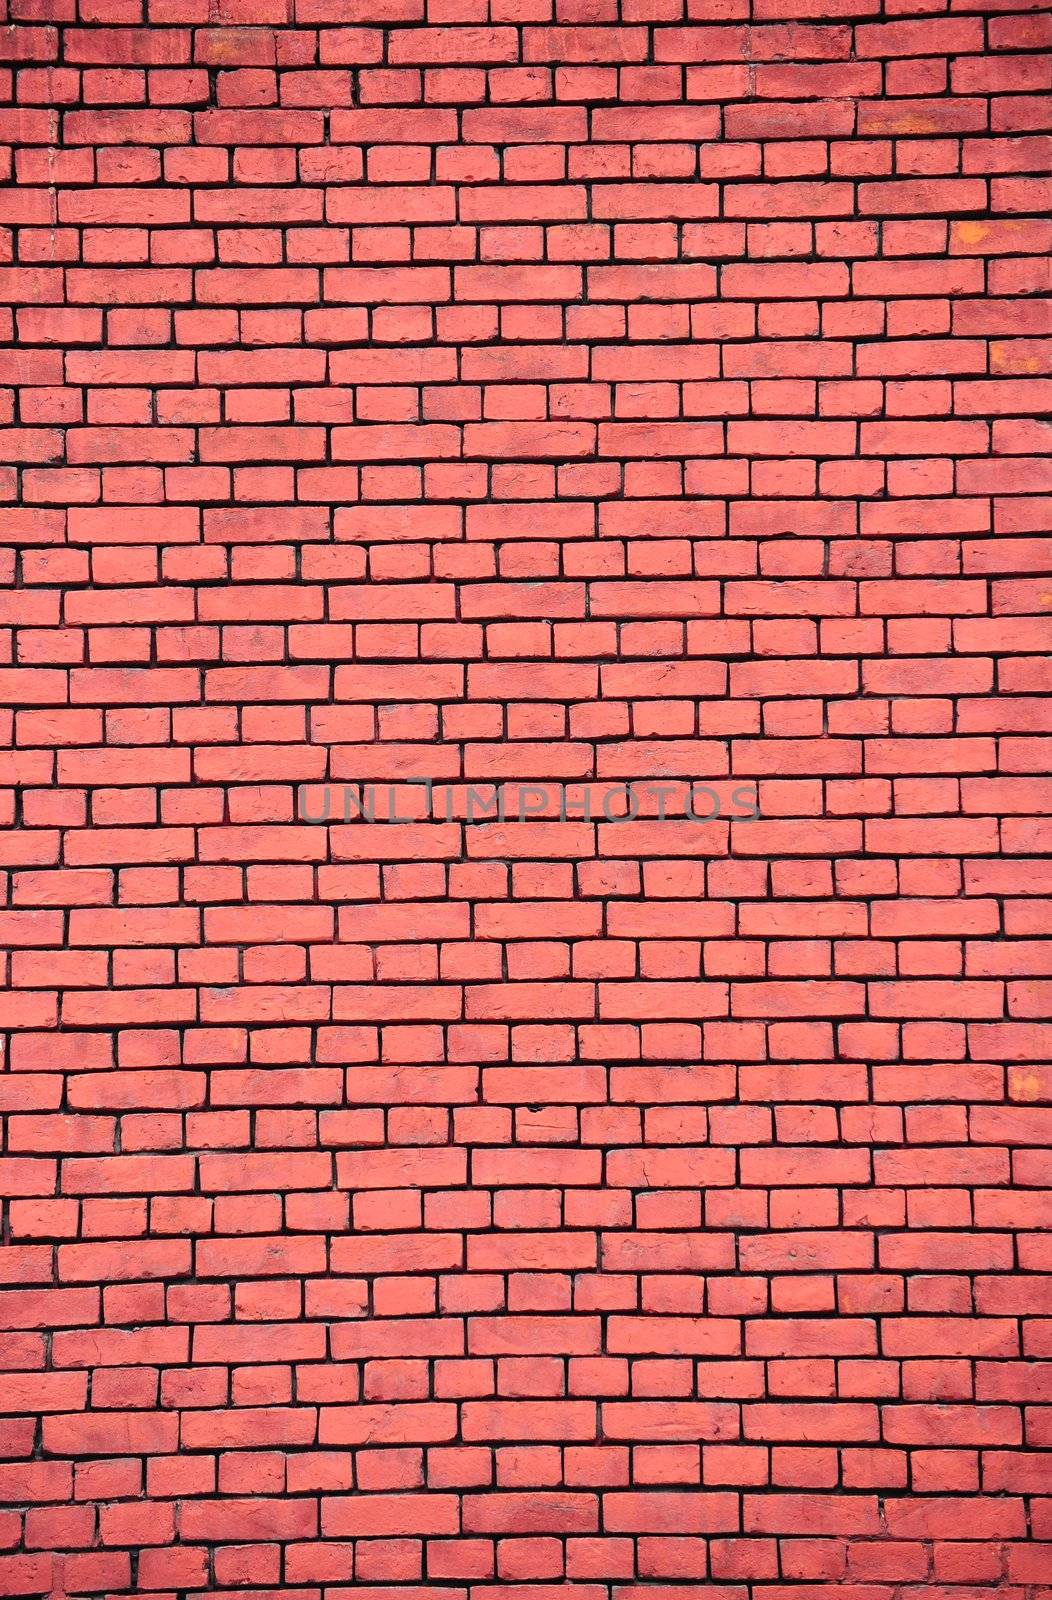 Brick Wall by gkuna